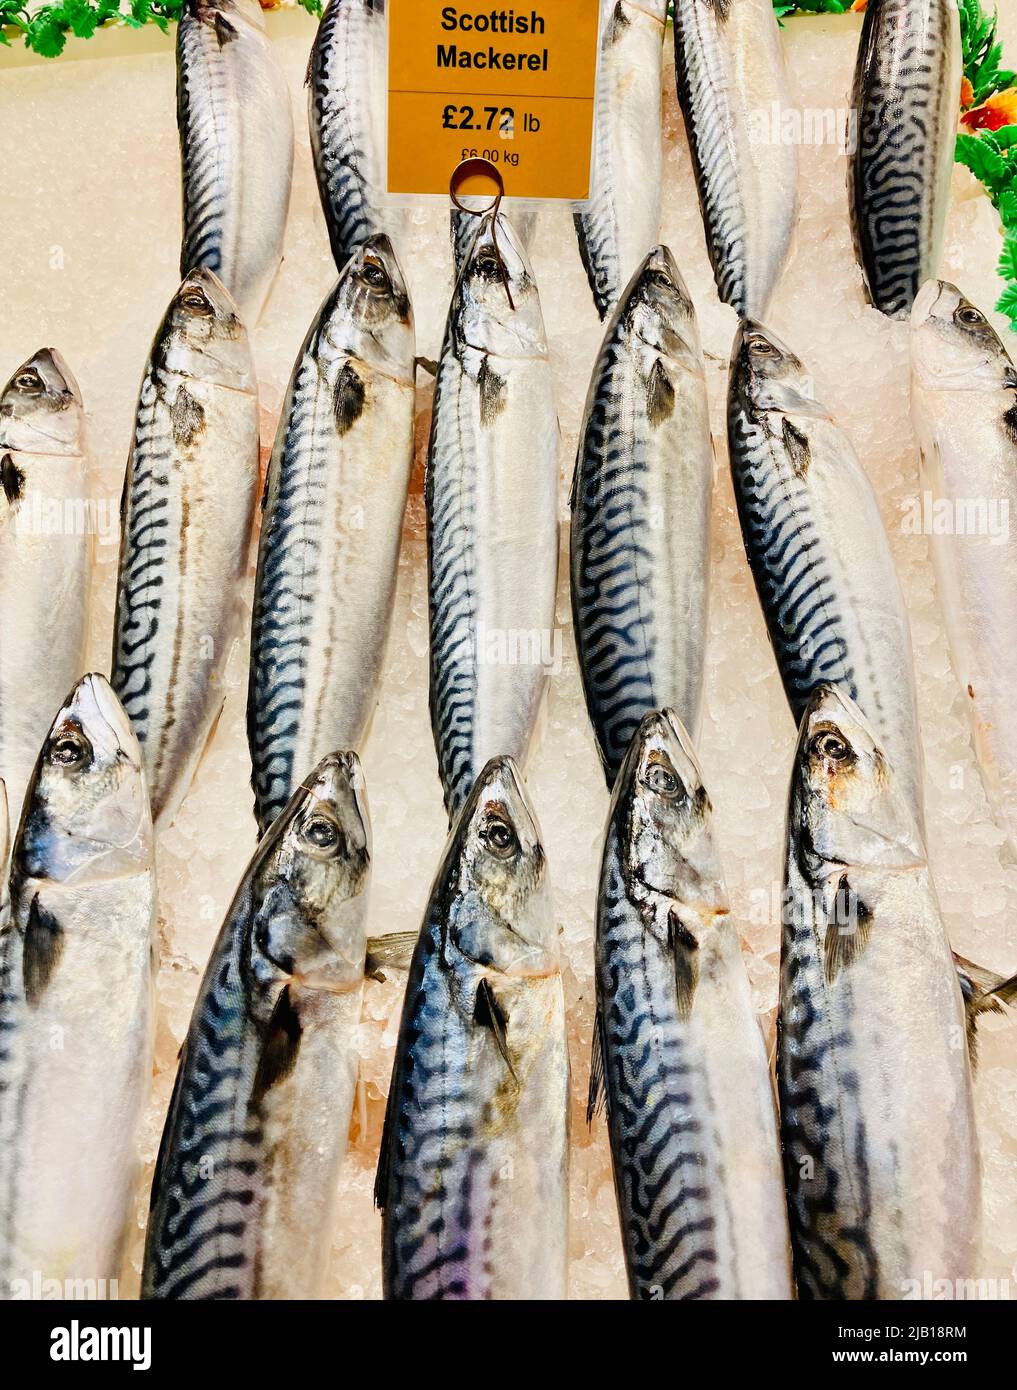 Fresh Scottish Mackerel (Scomber scombrus) on ice counter at a fishmongers market in Leeds. Stock Photo